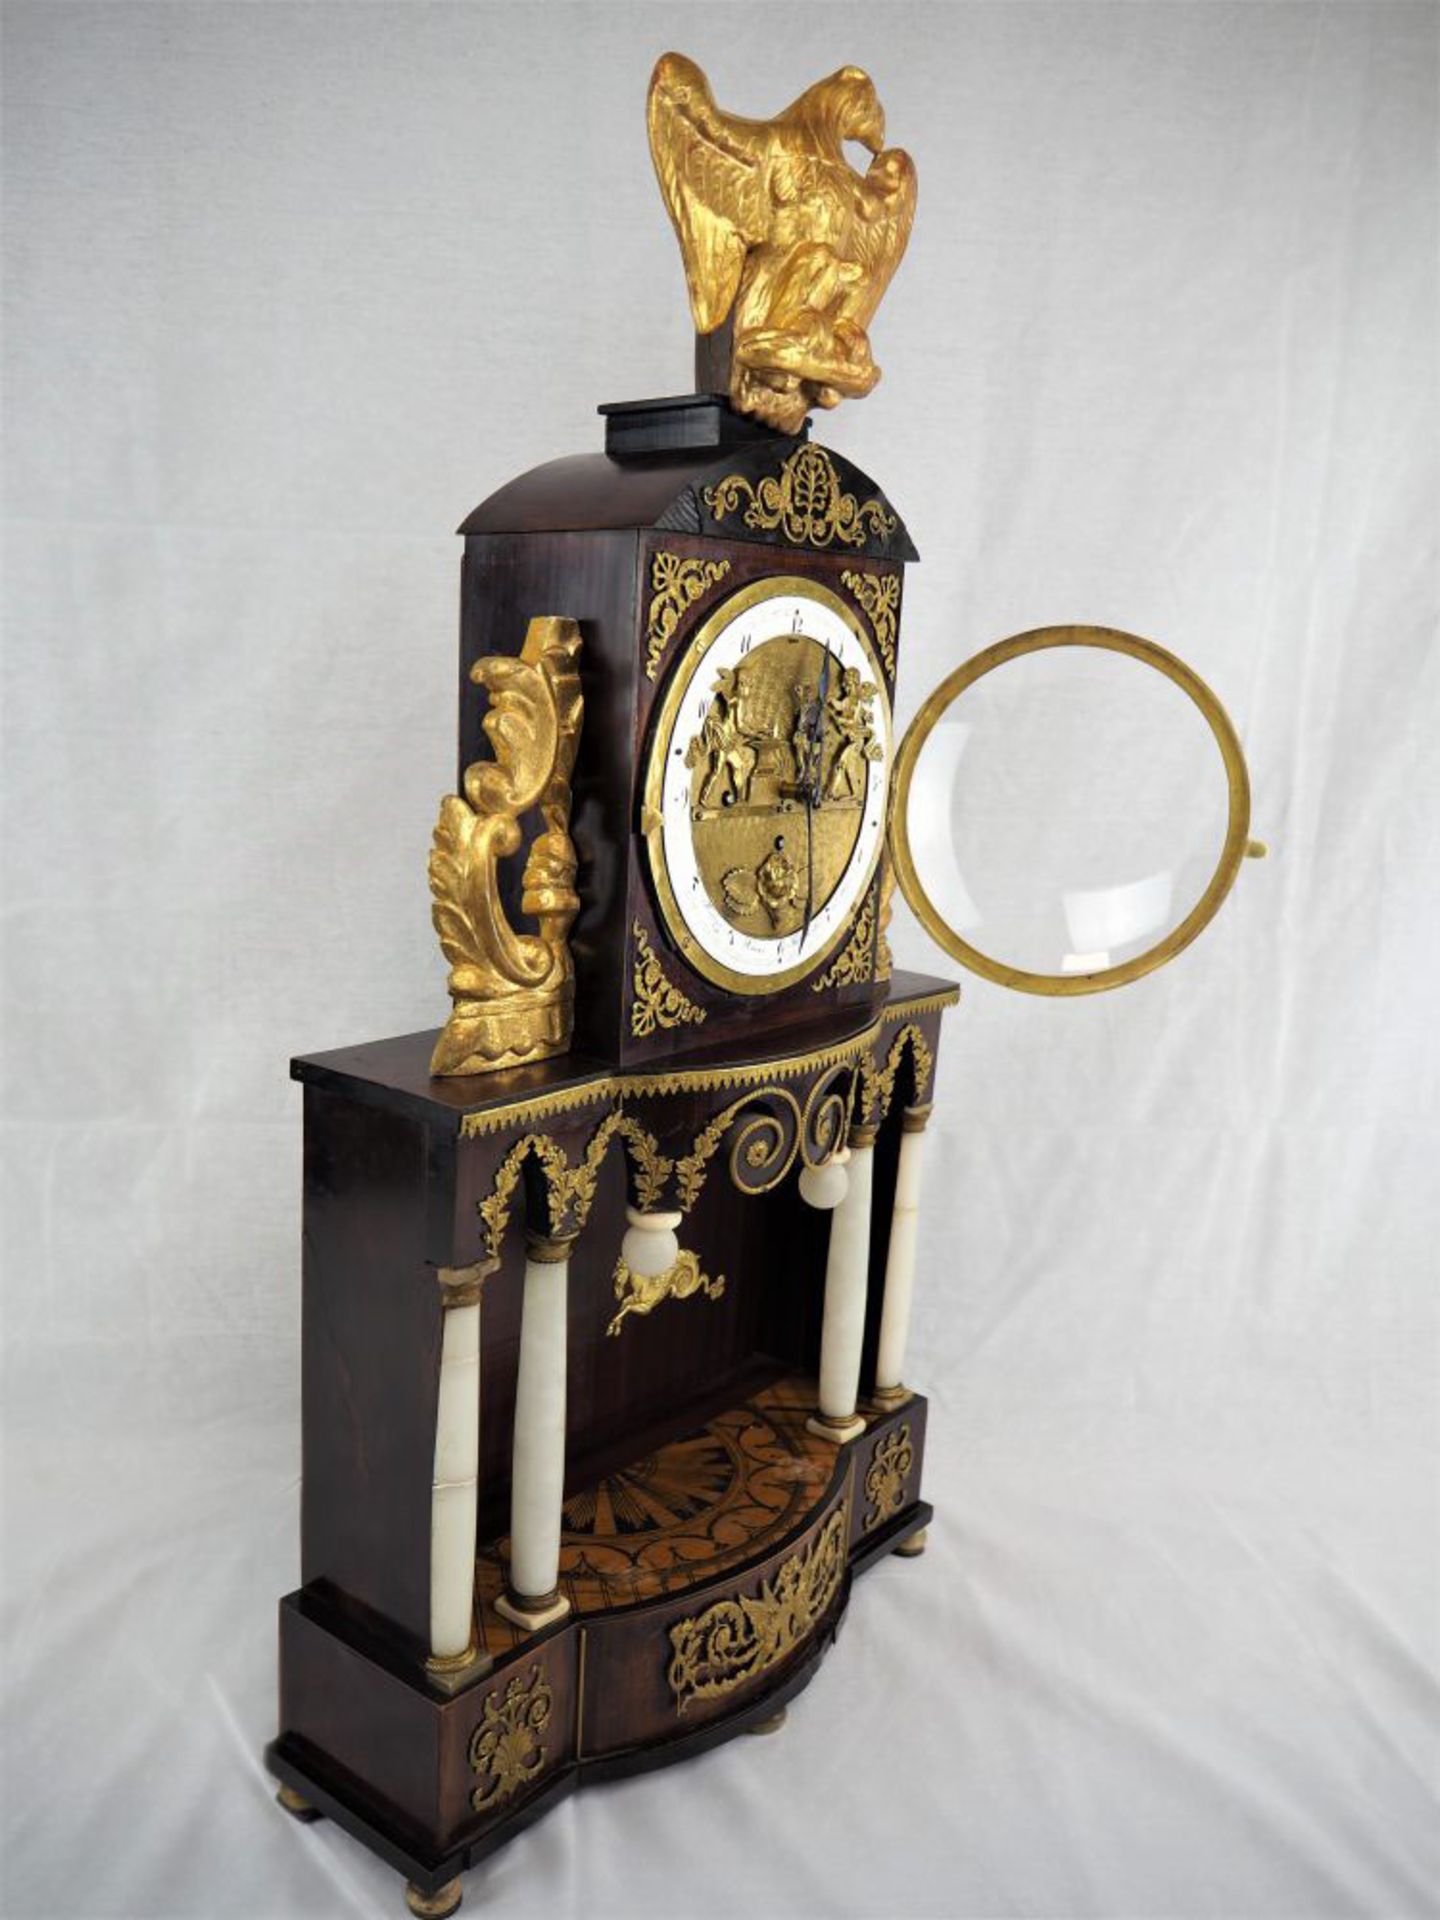 Viennese portal clock - house watch around 1820 - Image 7 of 9